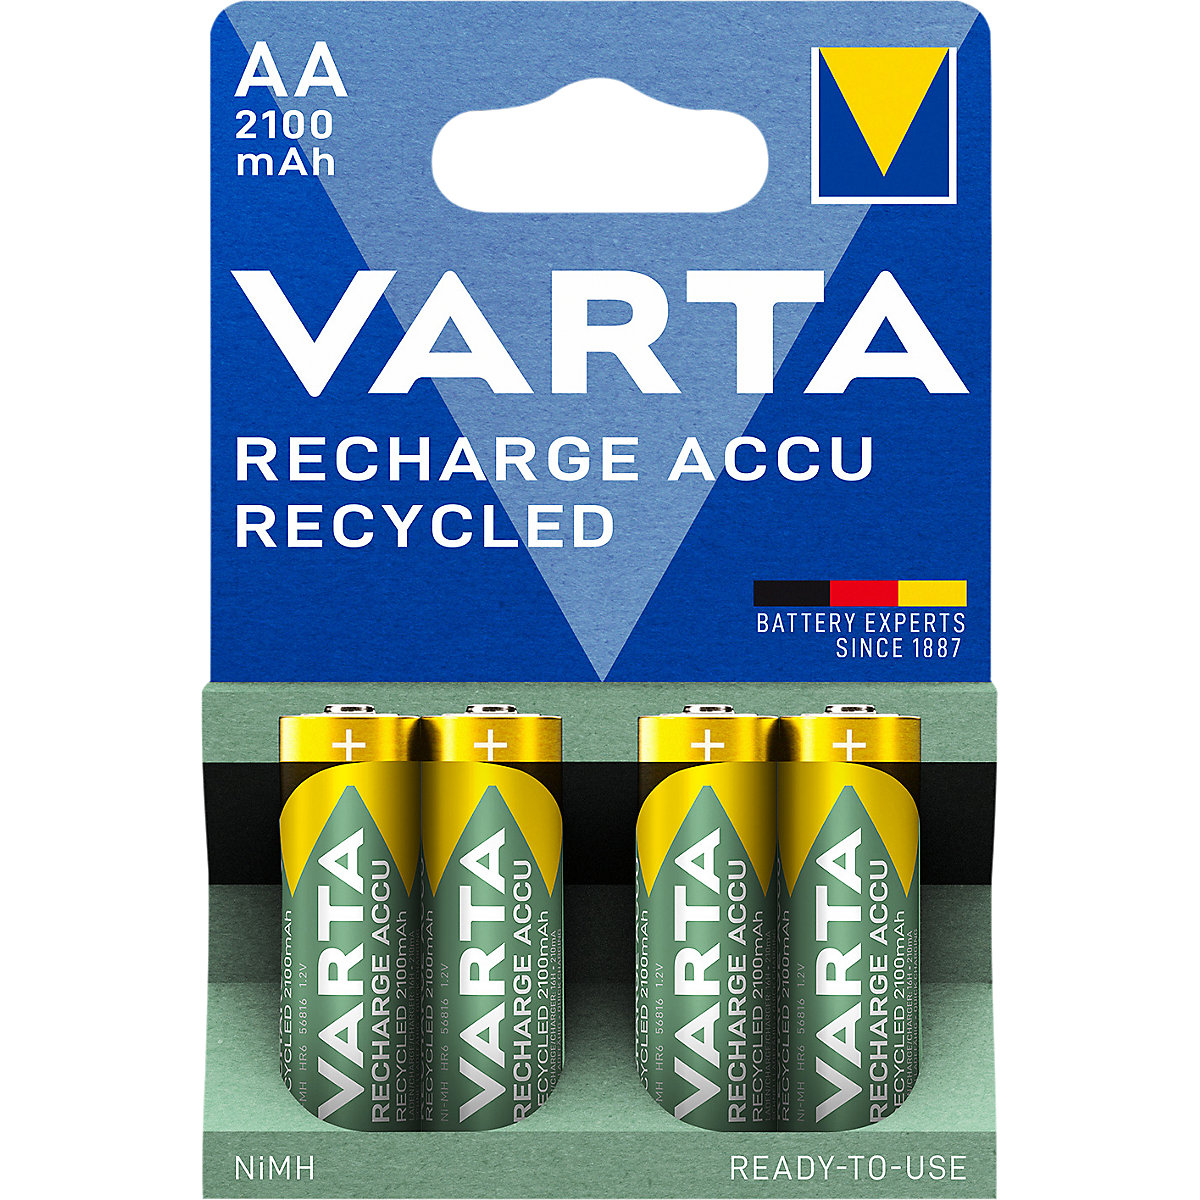 Battery, rechargeable - VARTA